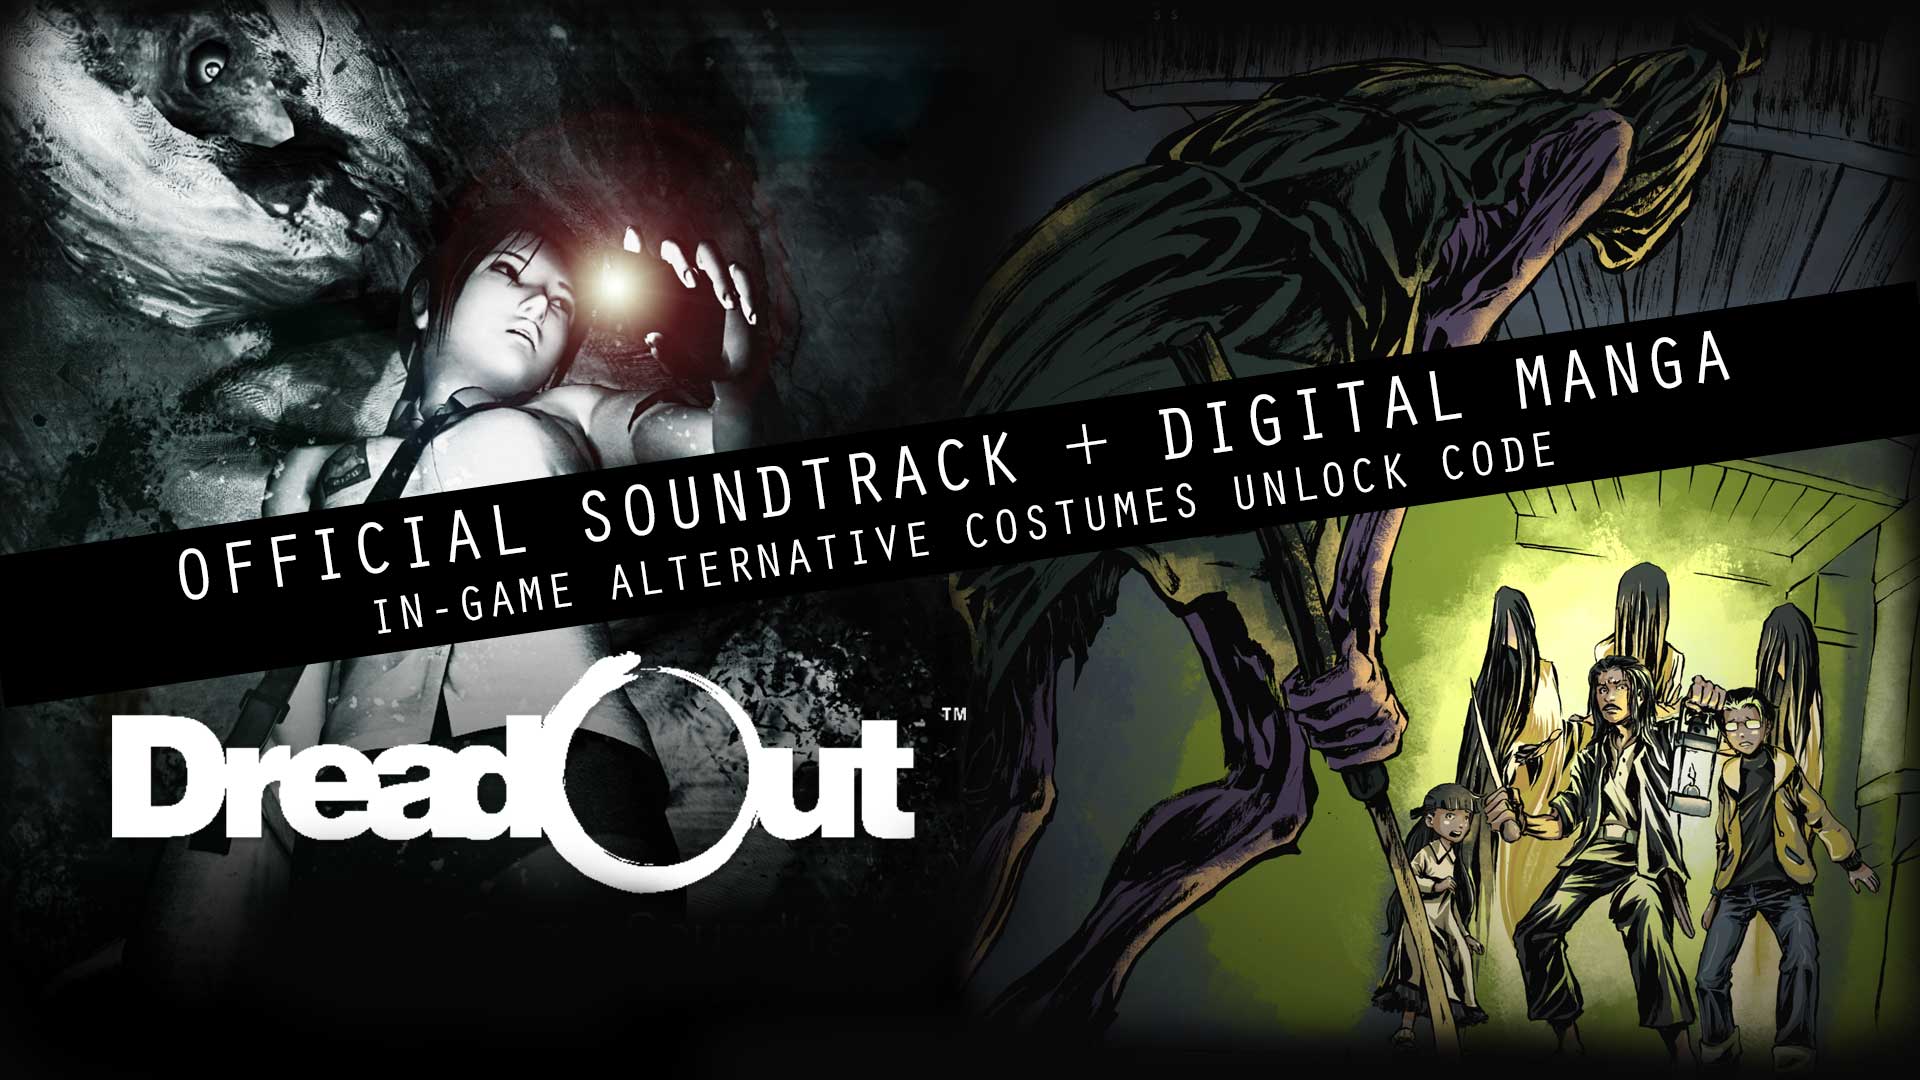 DreadOut Soundtrack & Manga DLC screenshot